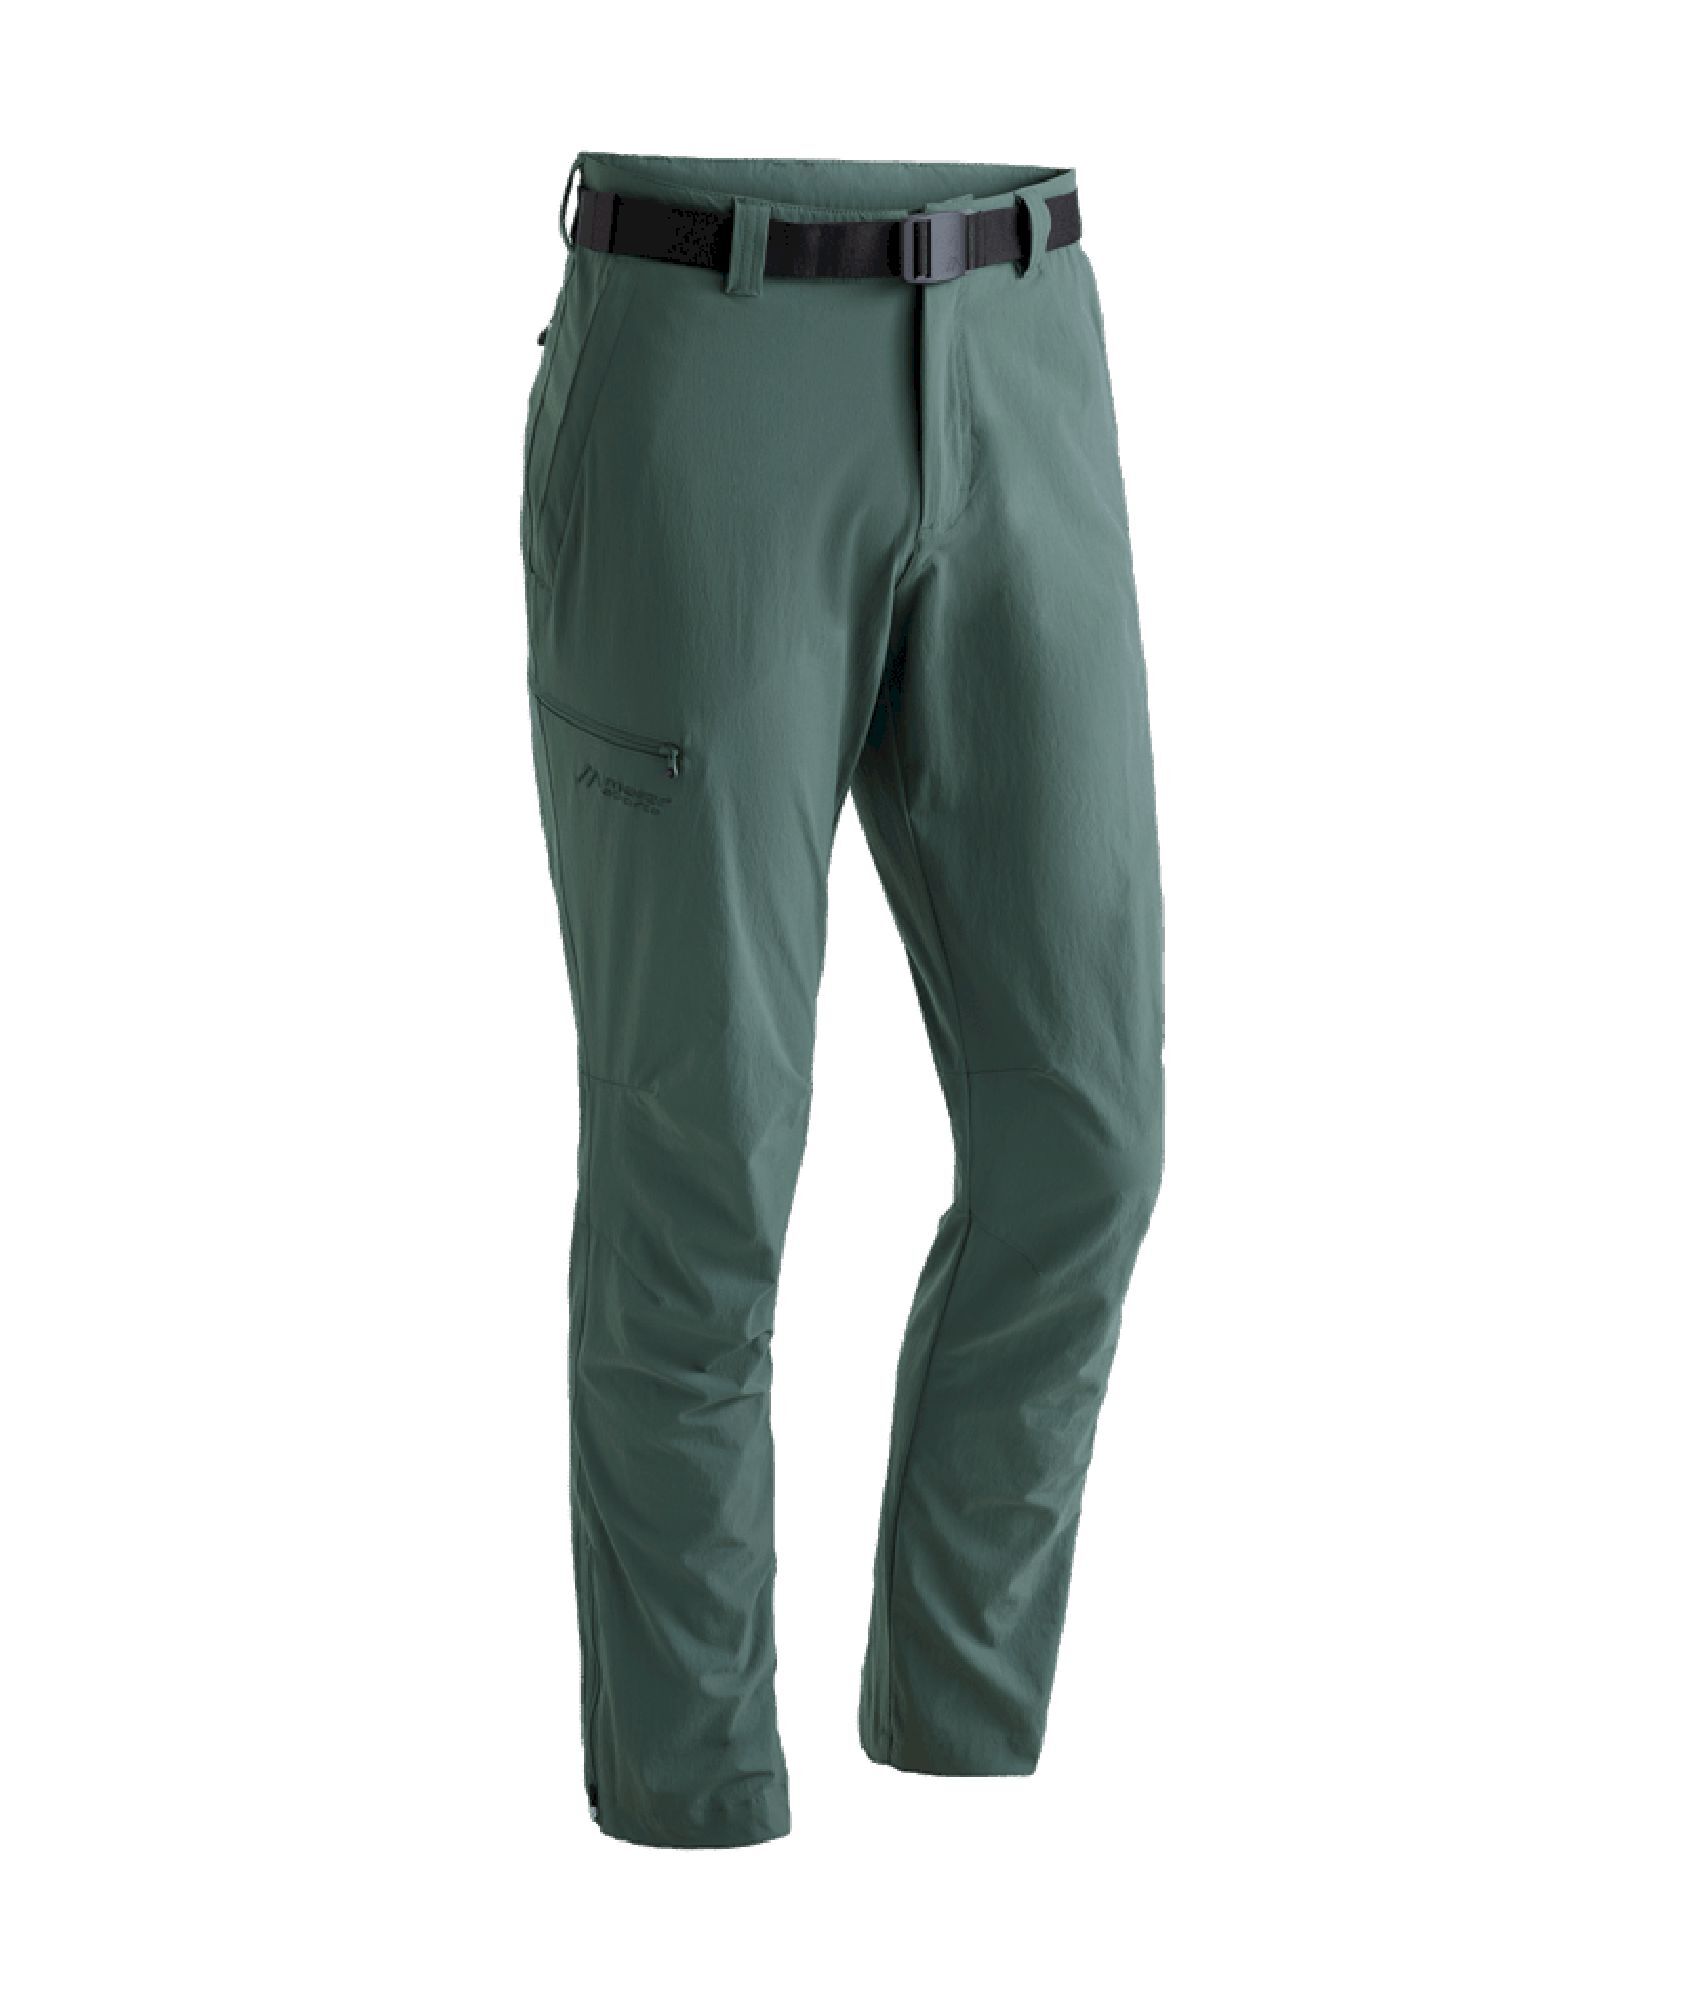 Maier Sports Torid Slim Pant - Walking trousers - Men's | Hardloop